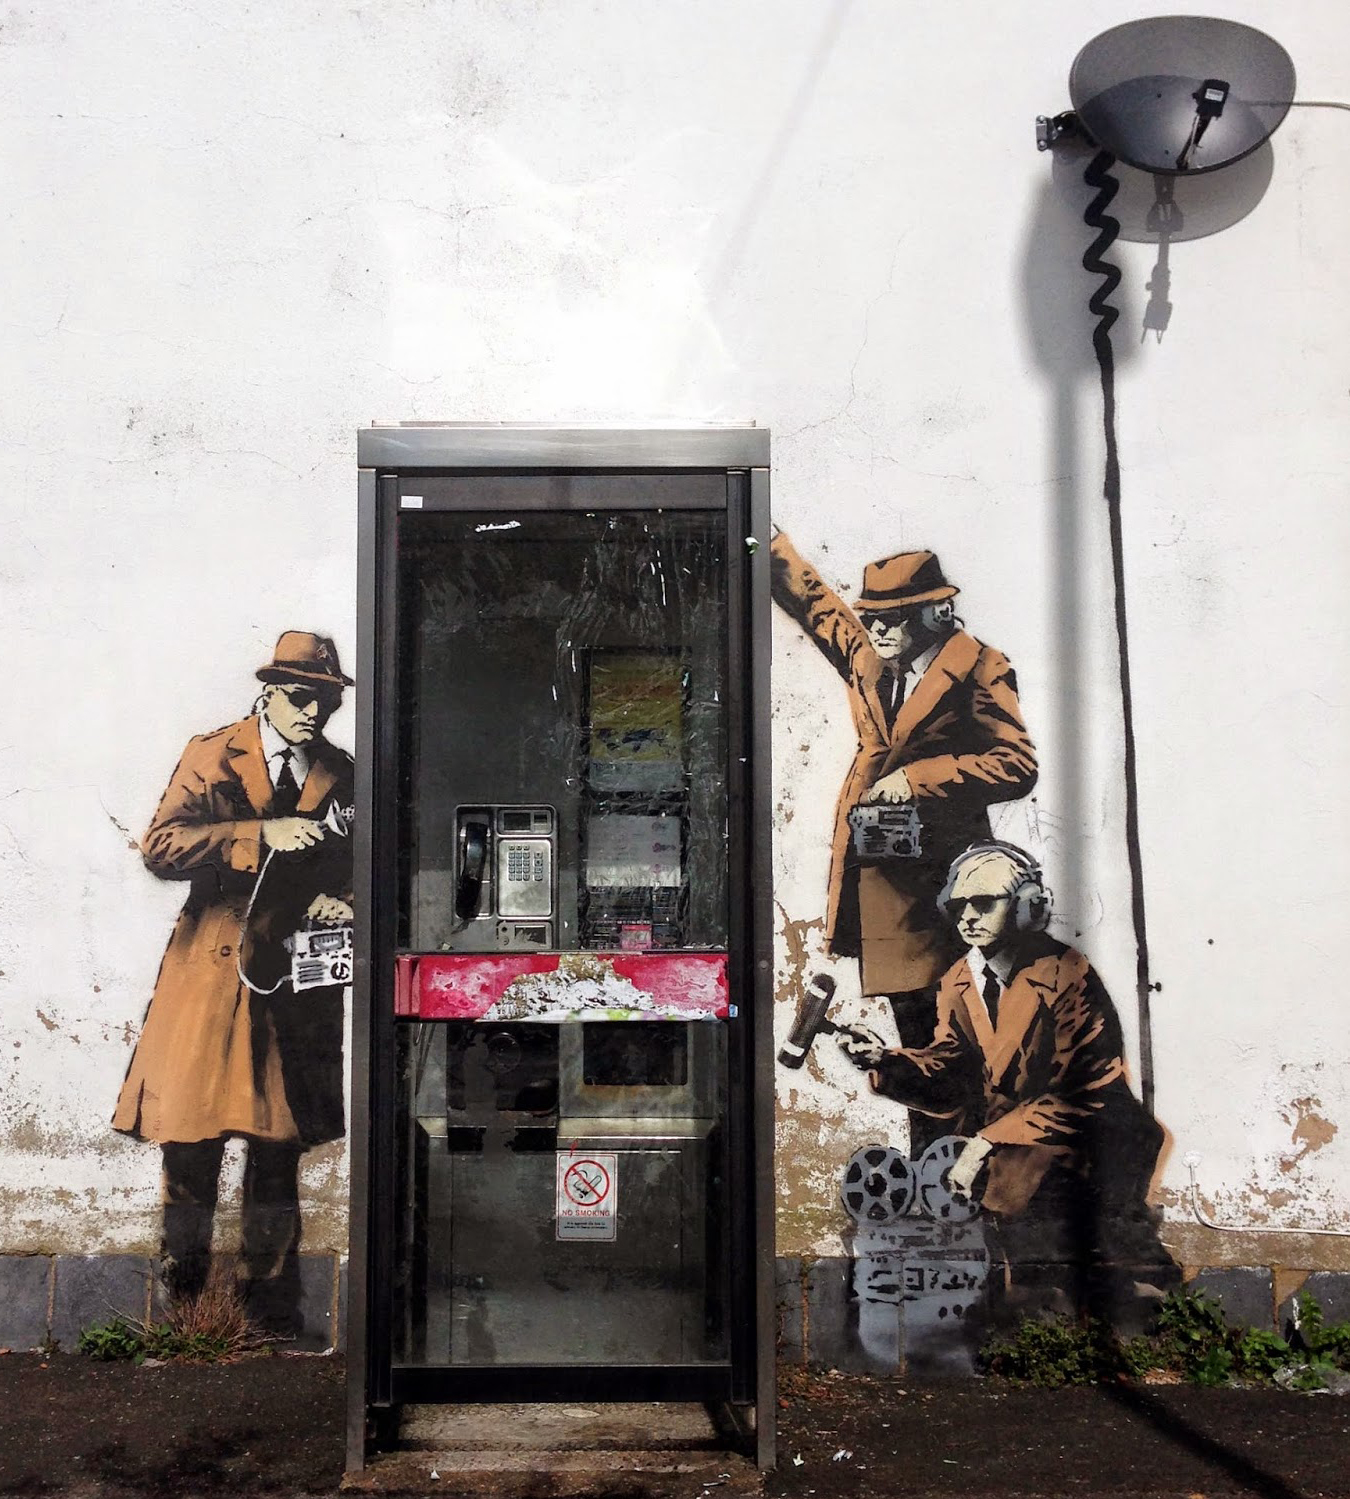 Muro com famoso graffiti de Banksy foi vendido